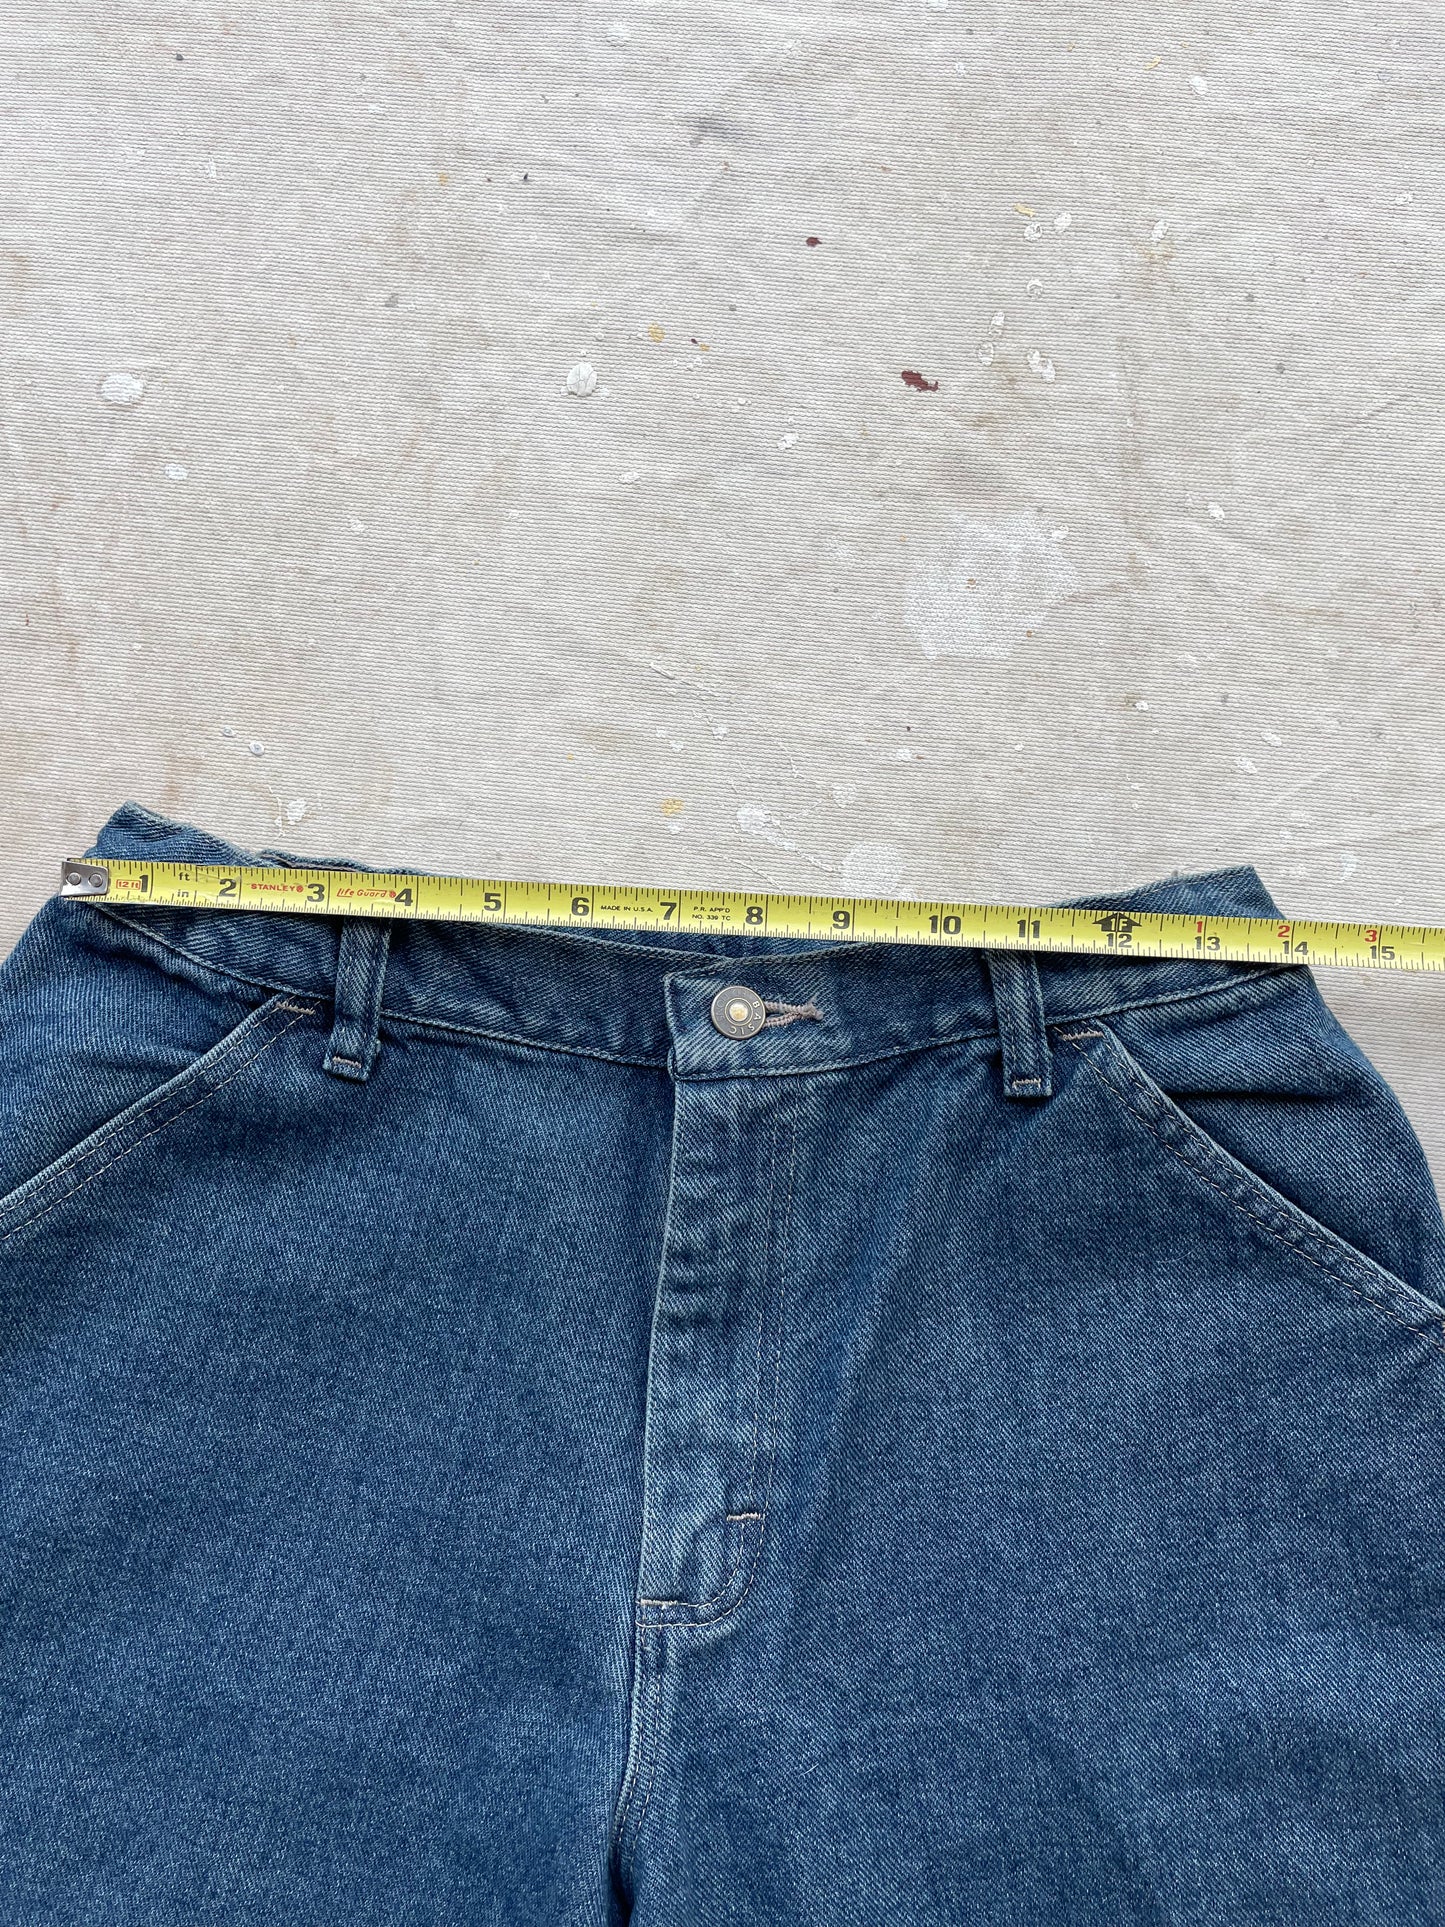 Adjustable Baggy Carpenter Jeans—[28-30x29]